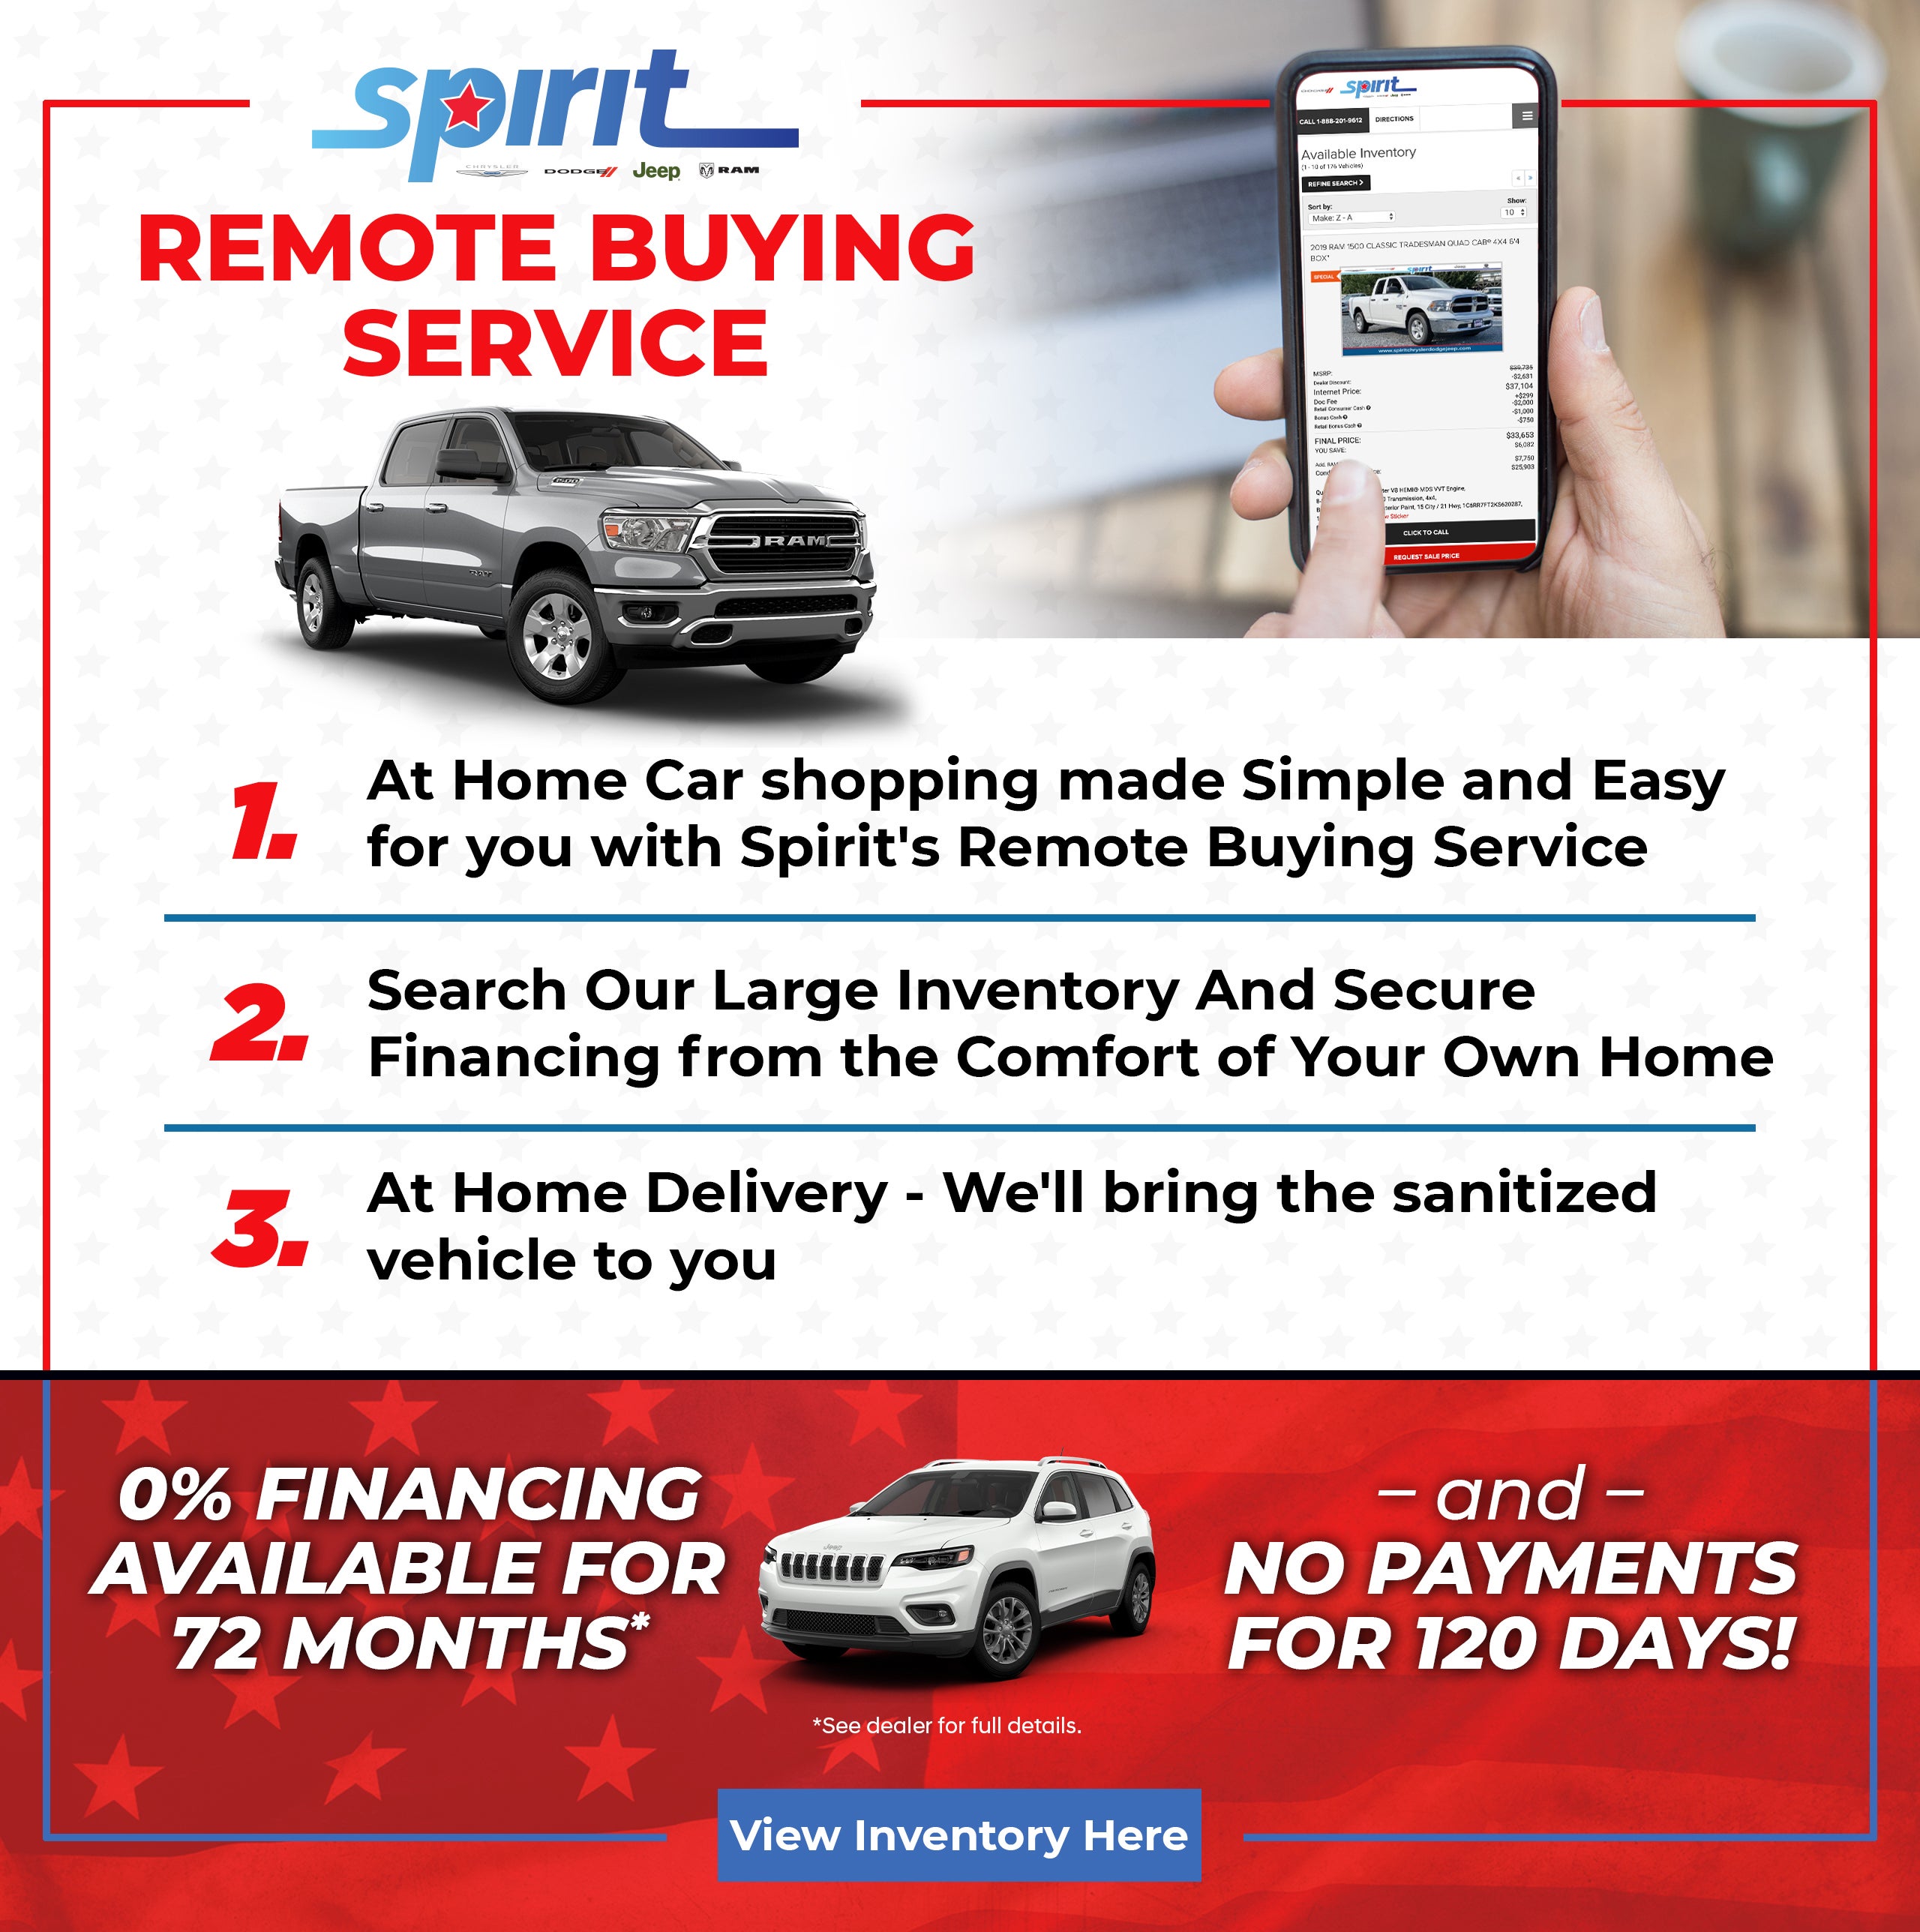 Spirit's Remote Buying Service